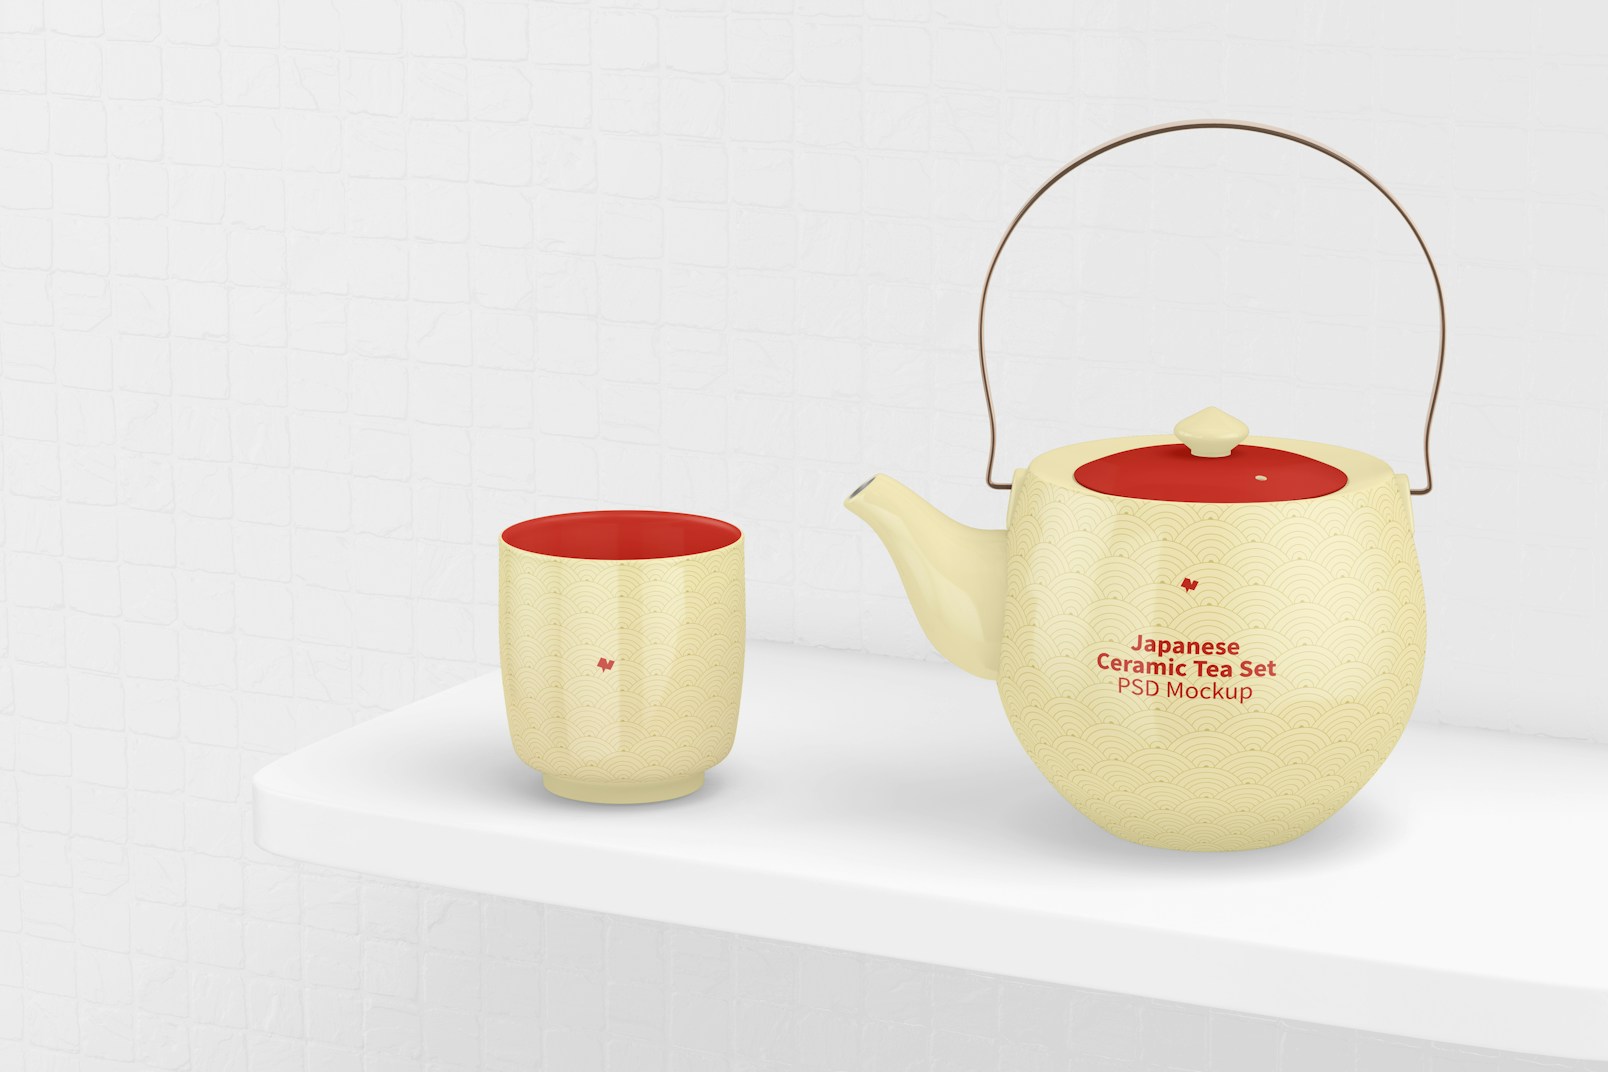 Japanese Ceramic Tea Set Mockup, Perspective View